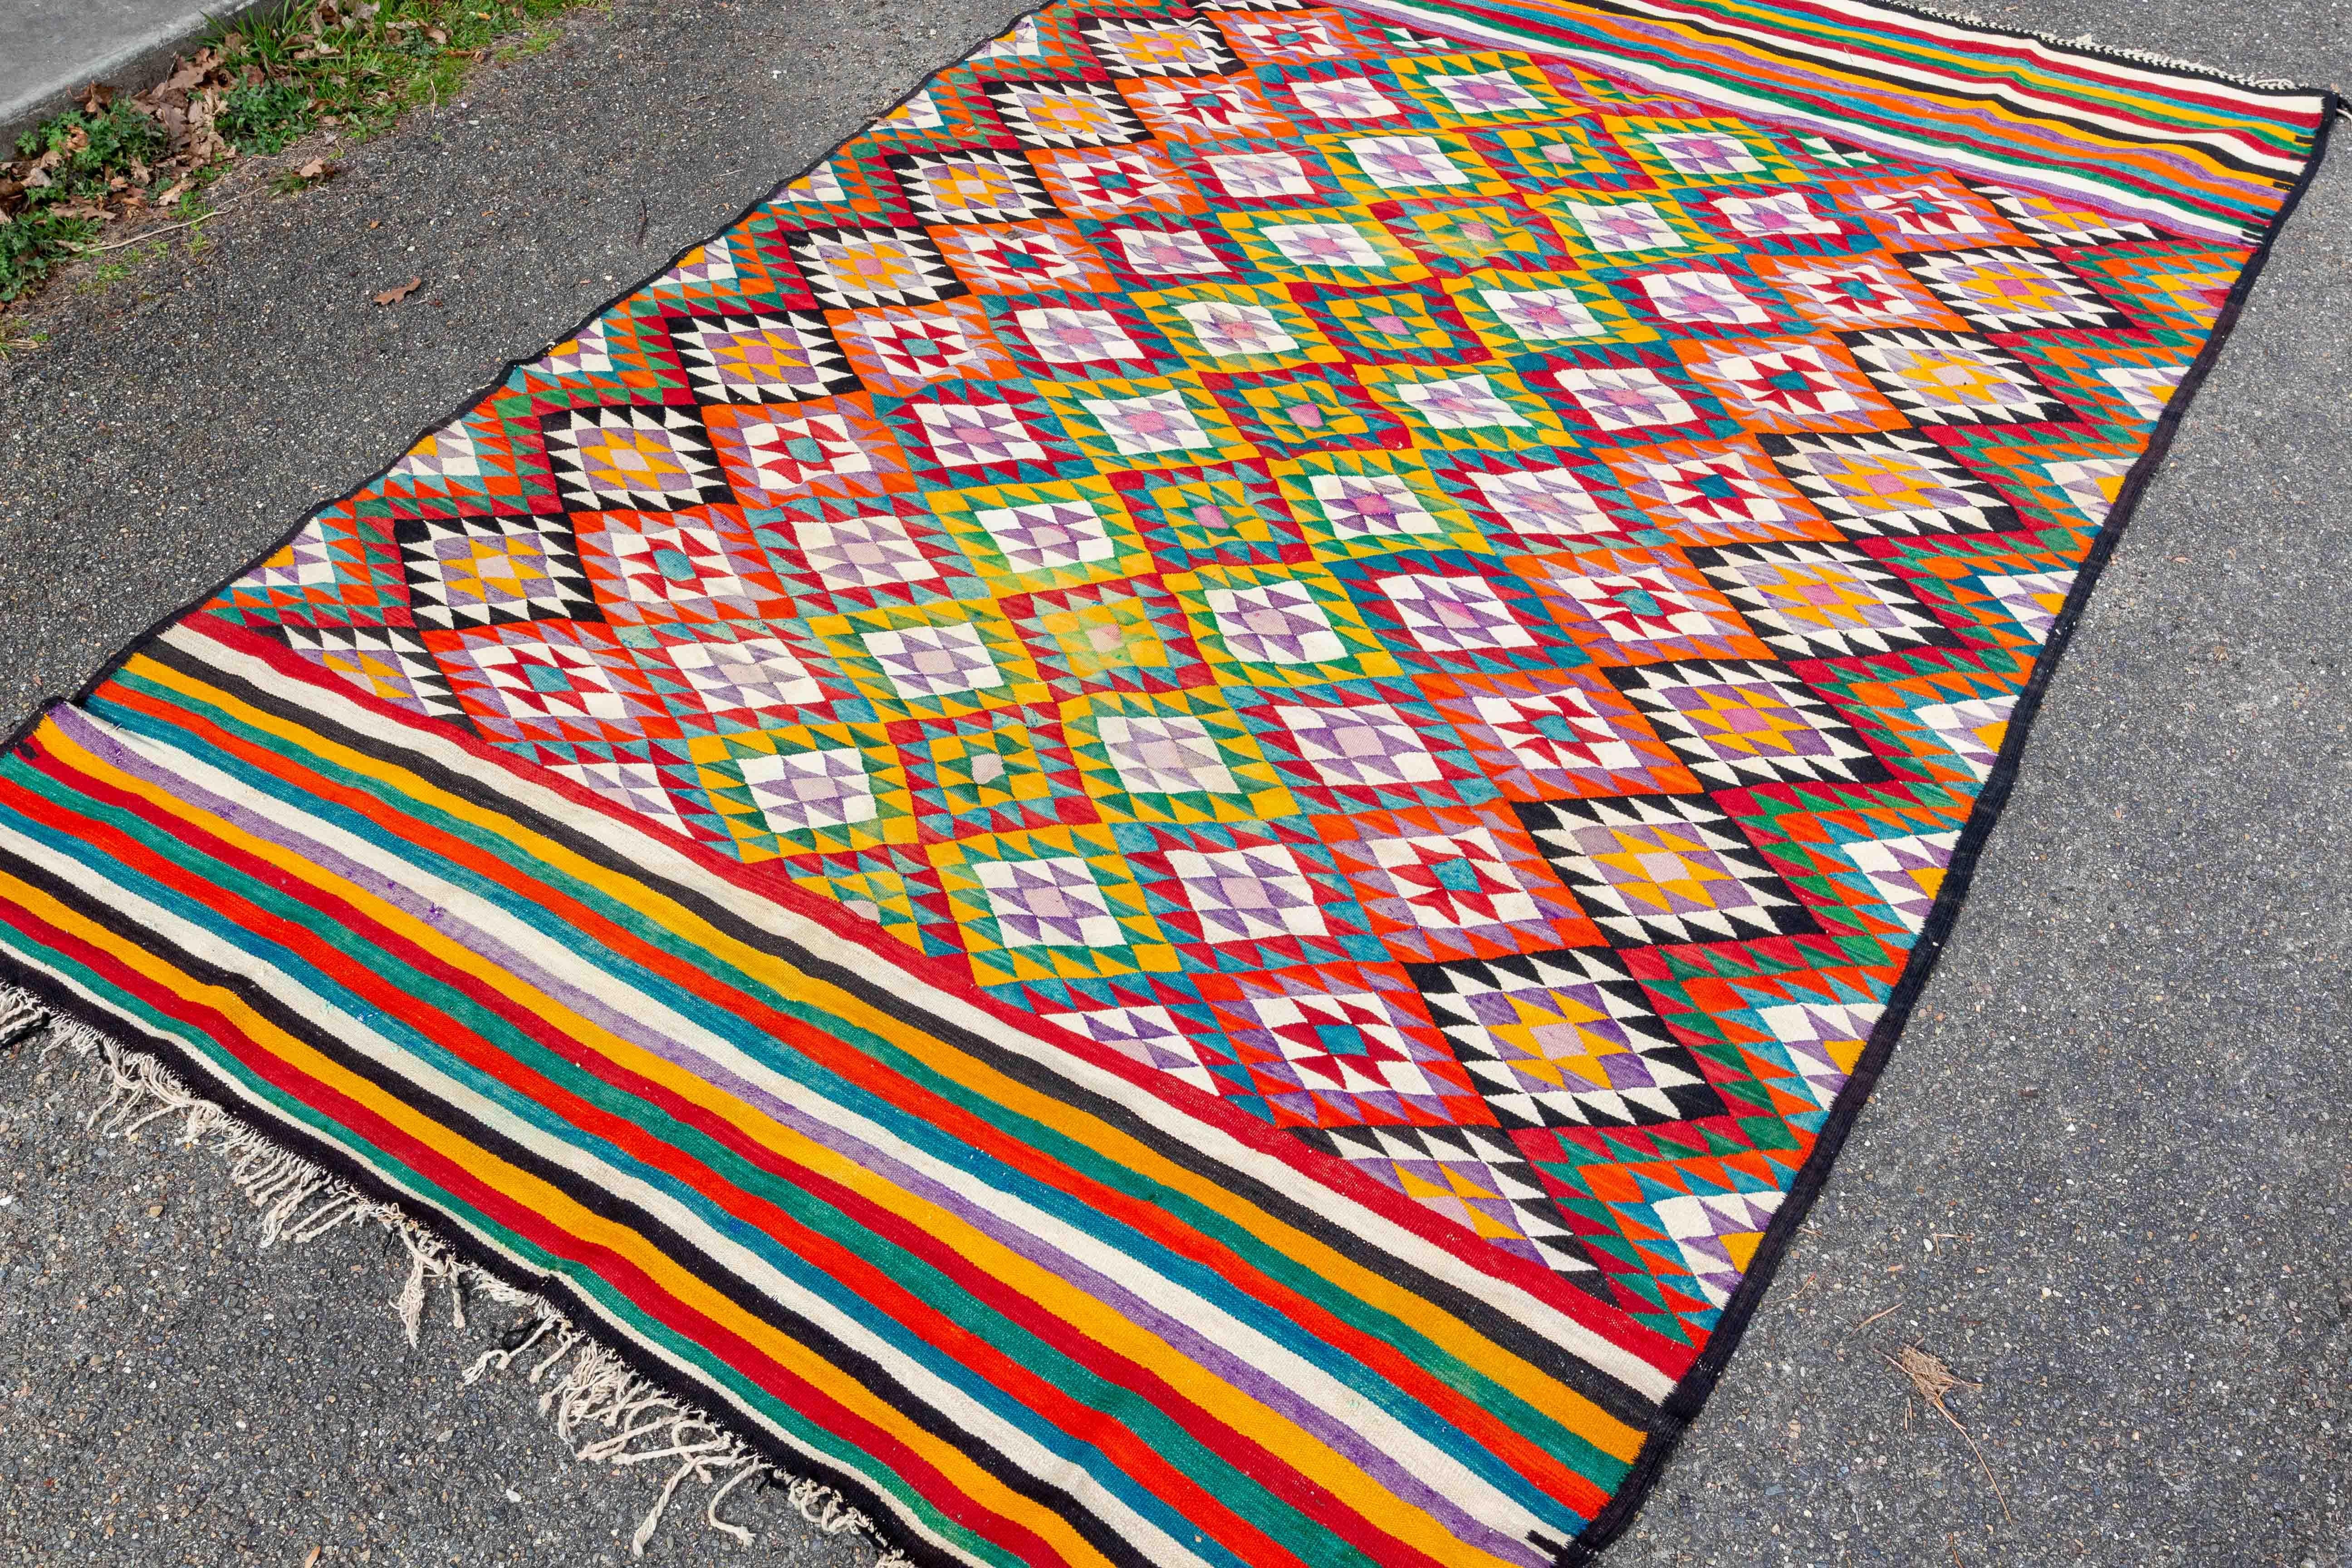 Mid-20th Century Afgan Kilim Carpet Multicolor and Geometric Patterns, circa 1950 For Sale